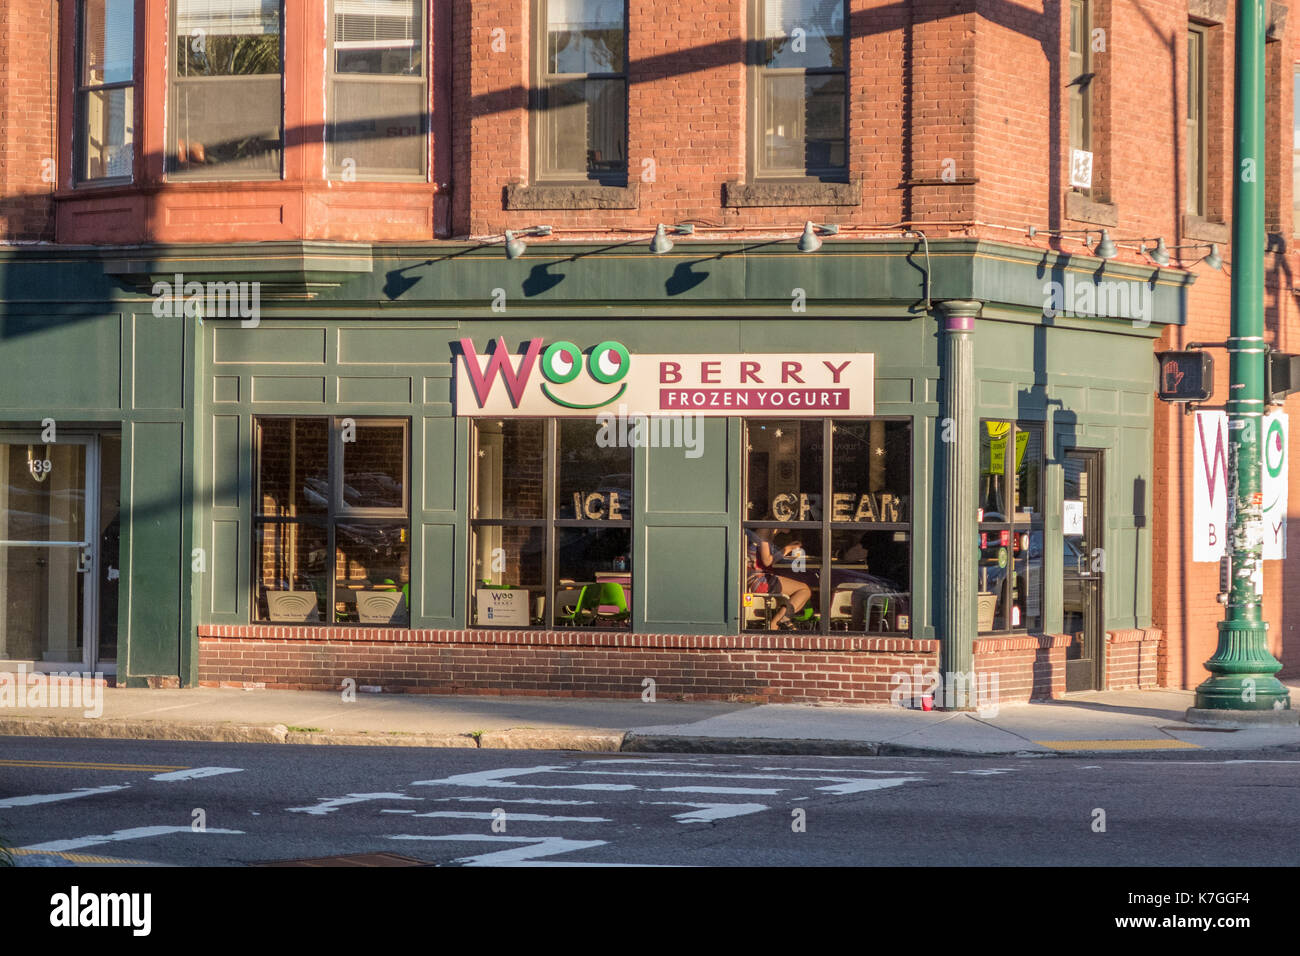 Wooberry on Highland Street in Worcester, MA sells frozen yogurt Stock Photo